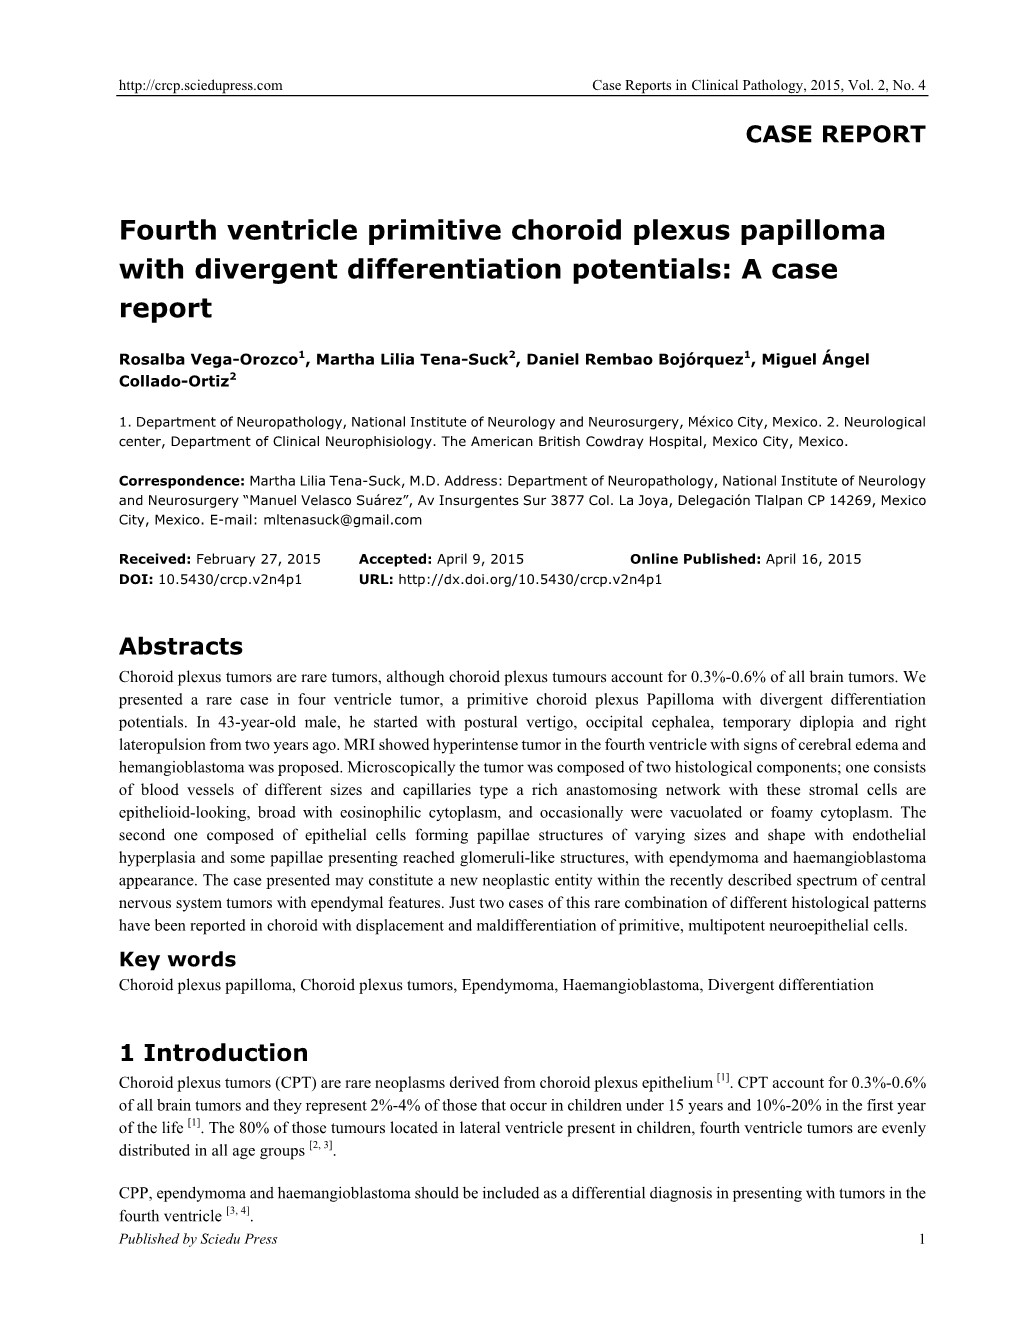 Fourth Ventricle Primitive Choroid Plexus Papilloma with Divergent Differentiation Potentials: a Case Report